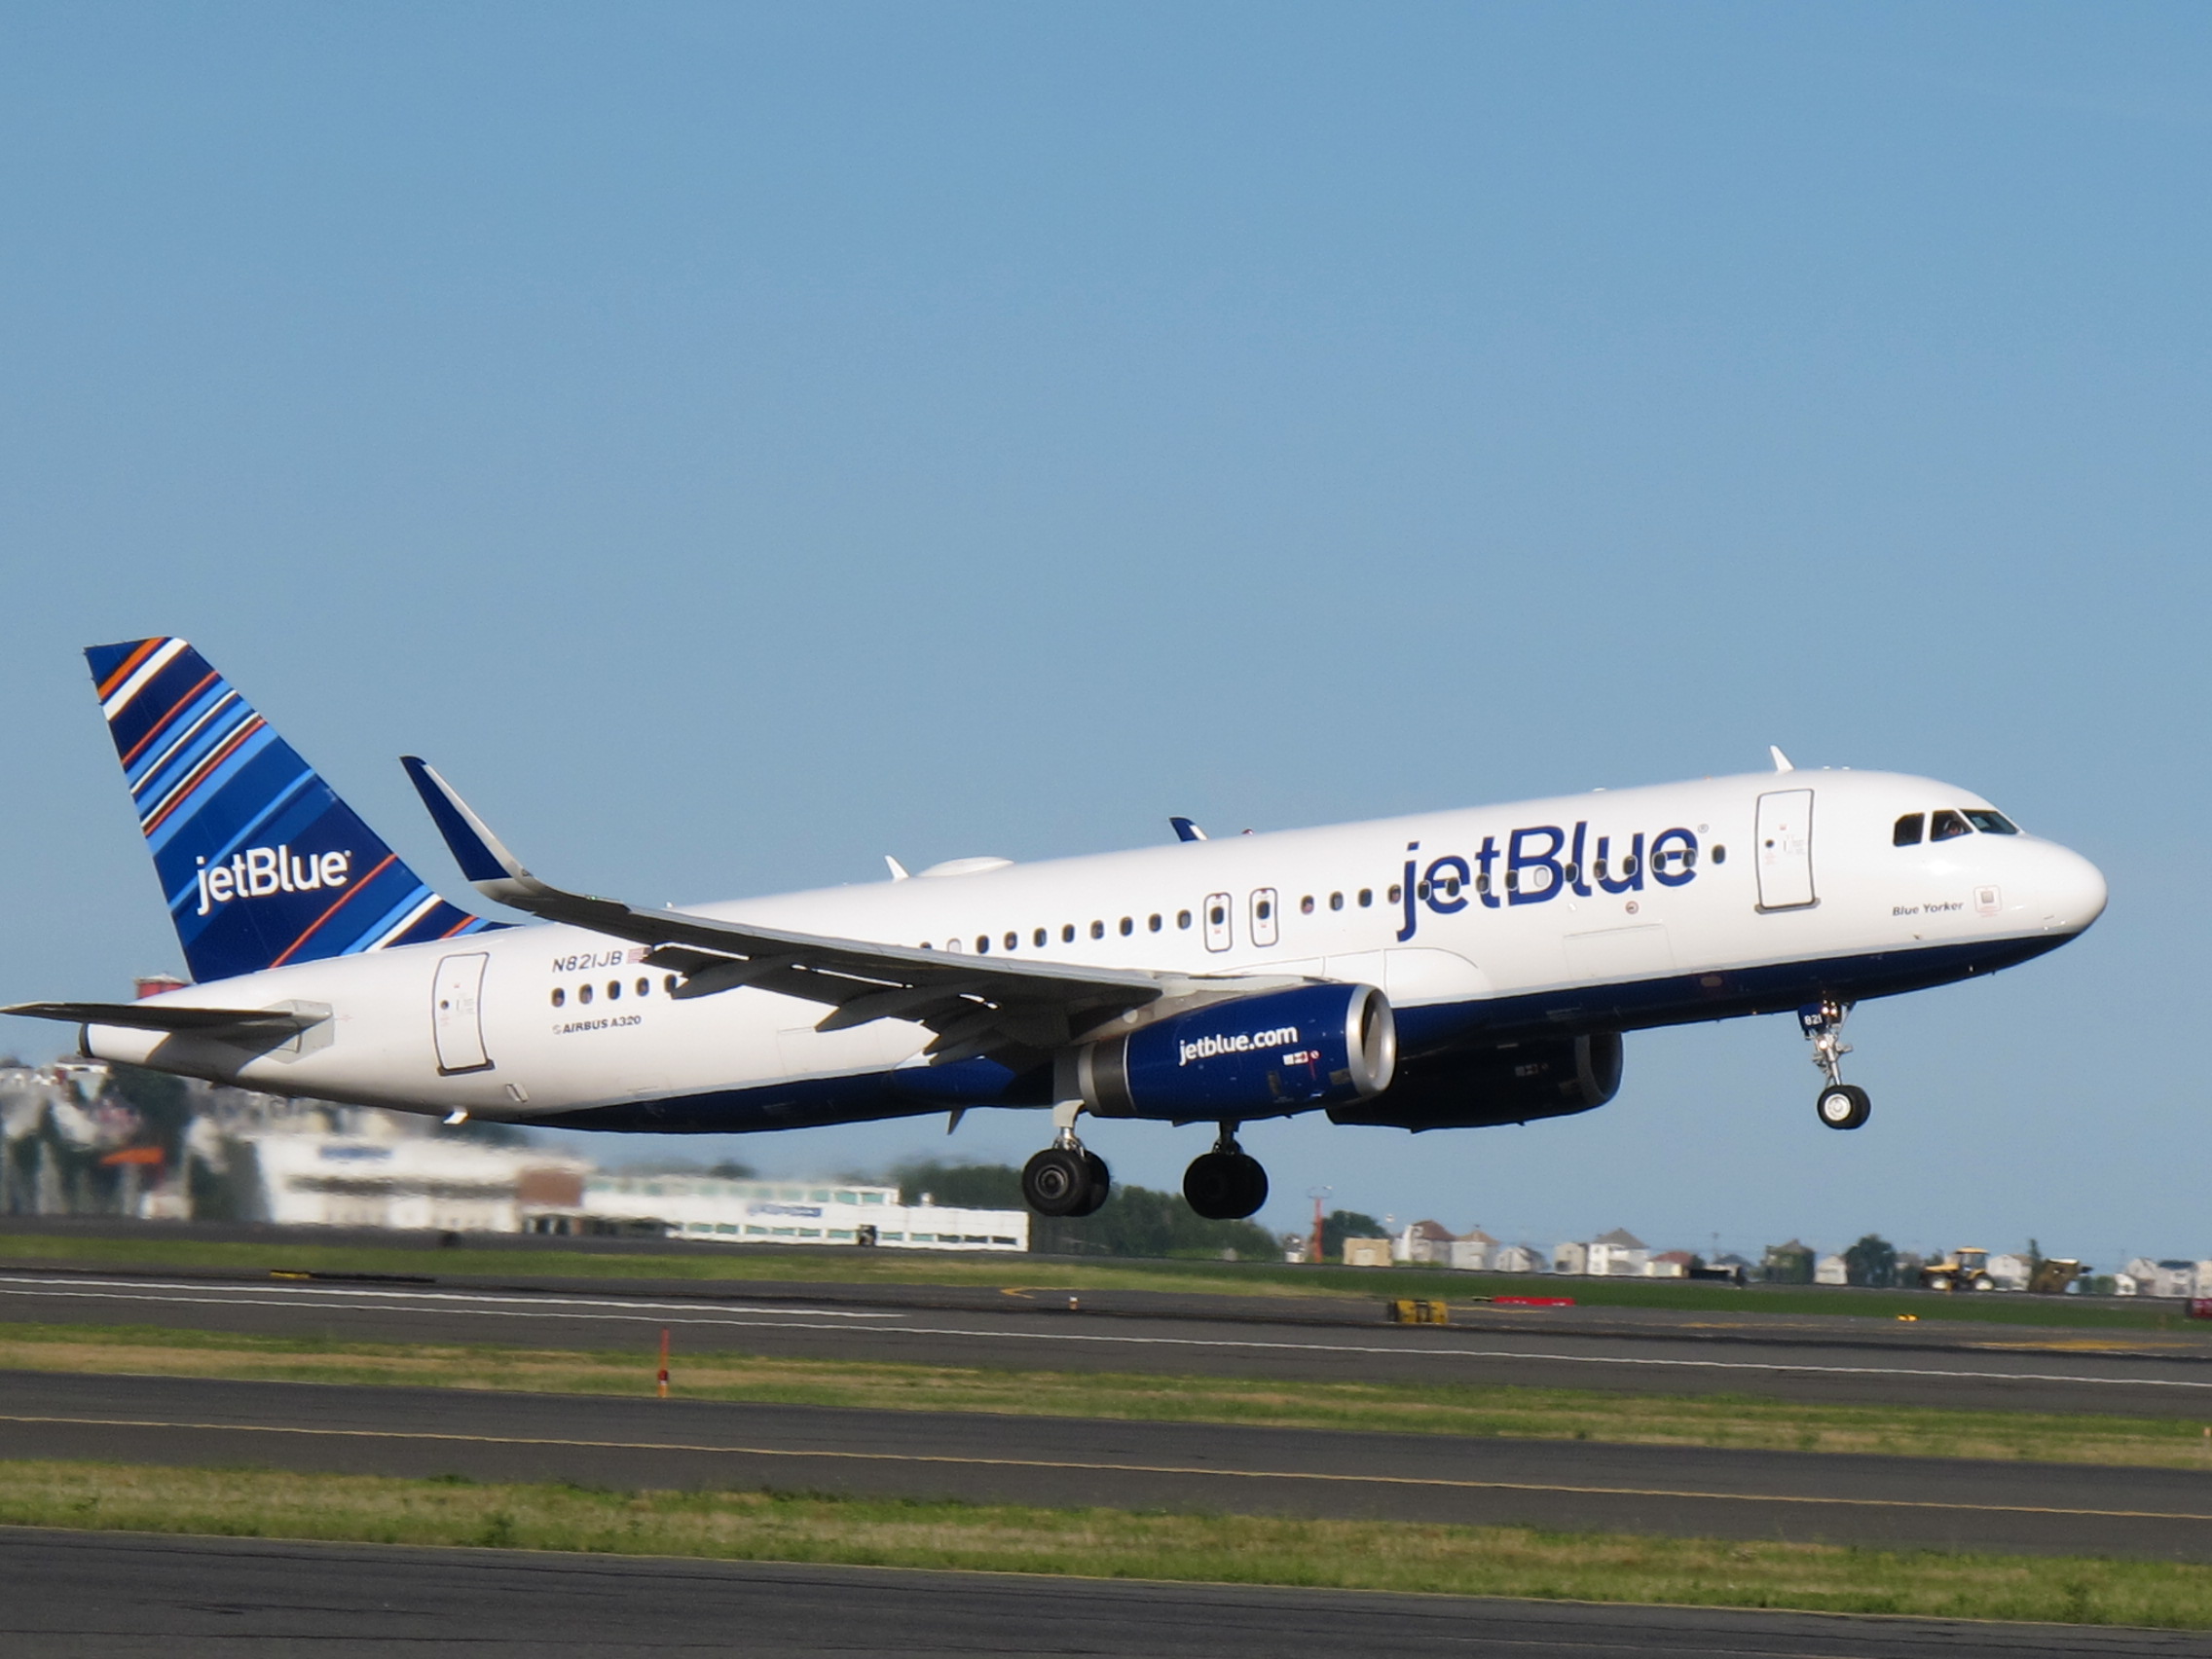 Deal Alert: Jet Blue’s Valentine’s Day Sale Has Flights For $39